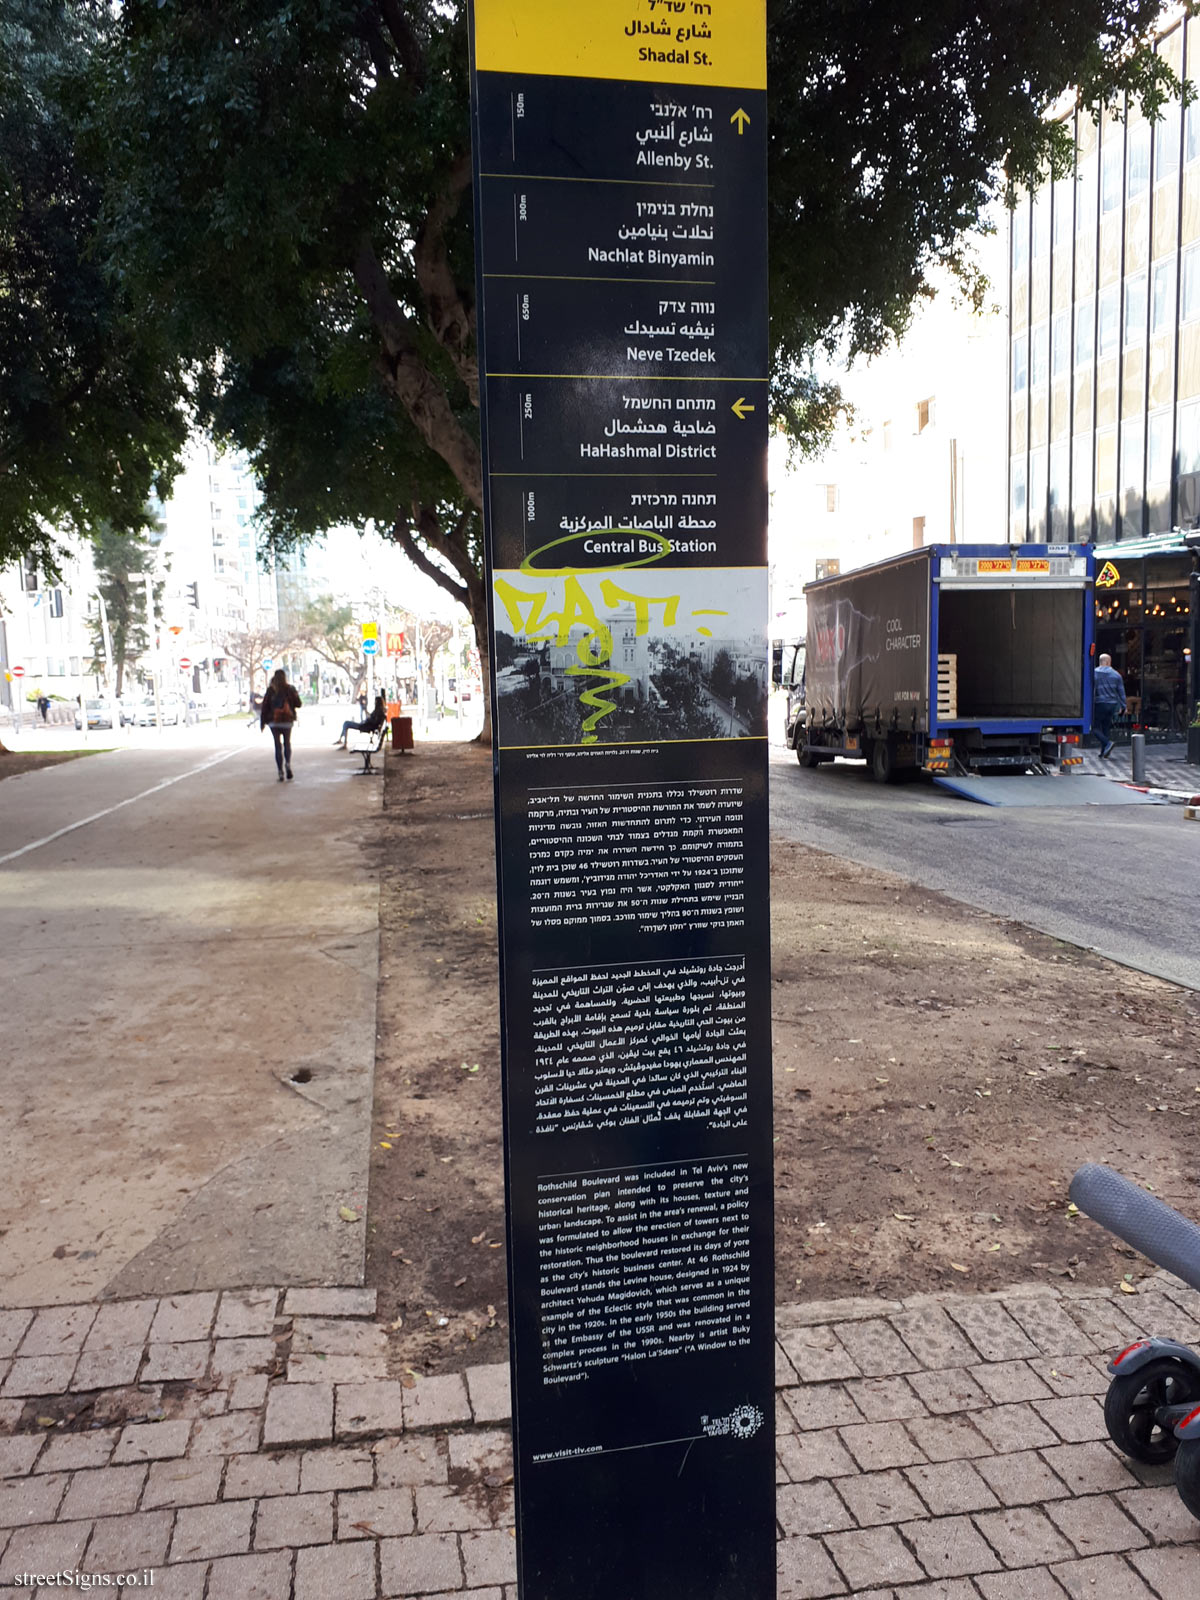 Tel Aviv - Shadal St (About Rothschild Boulevard)